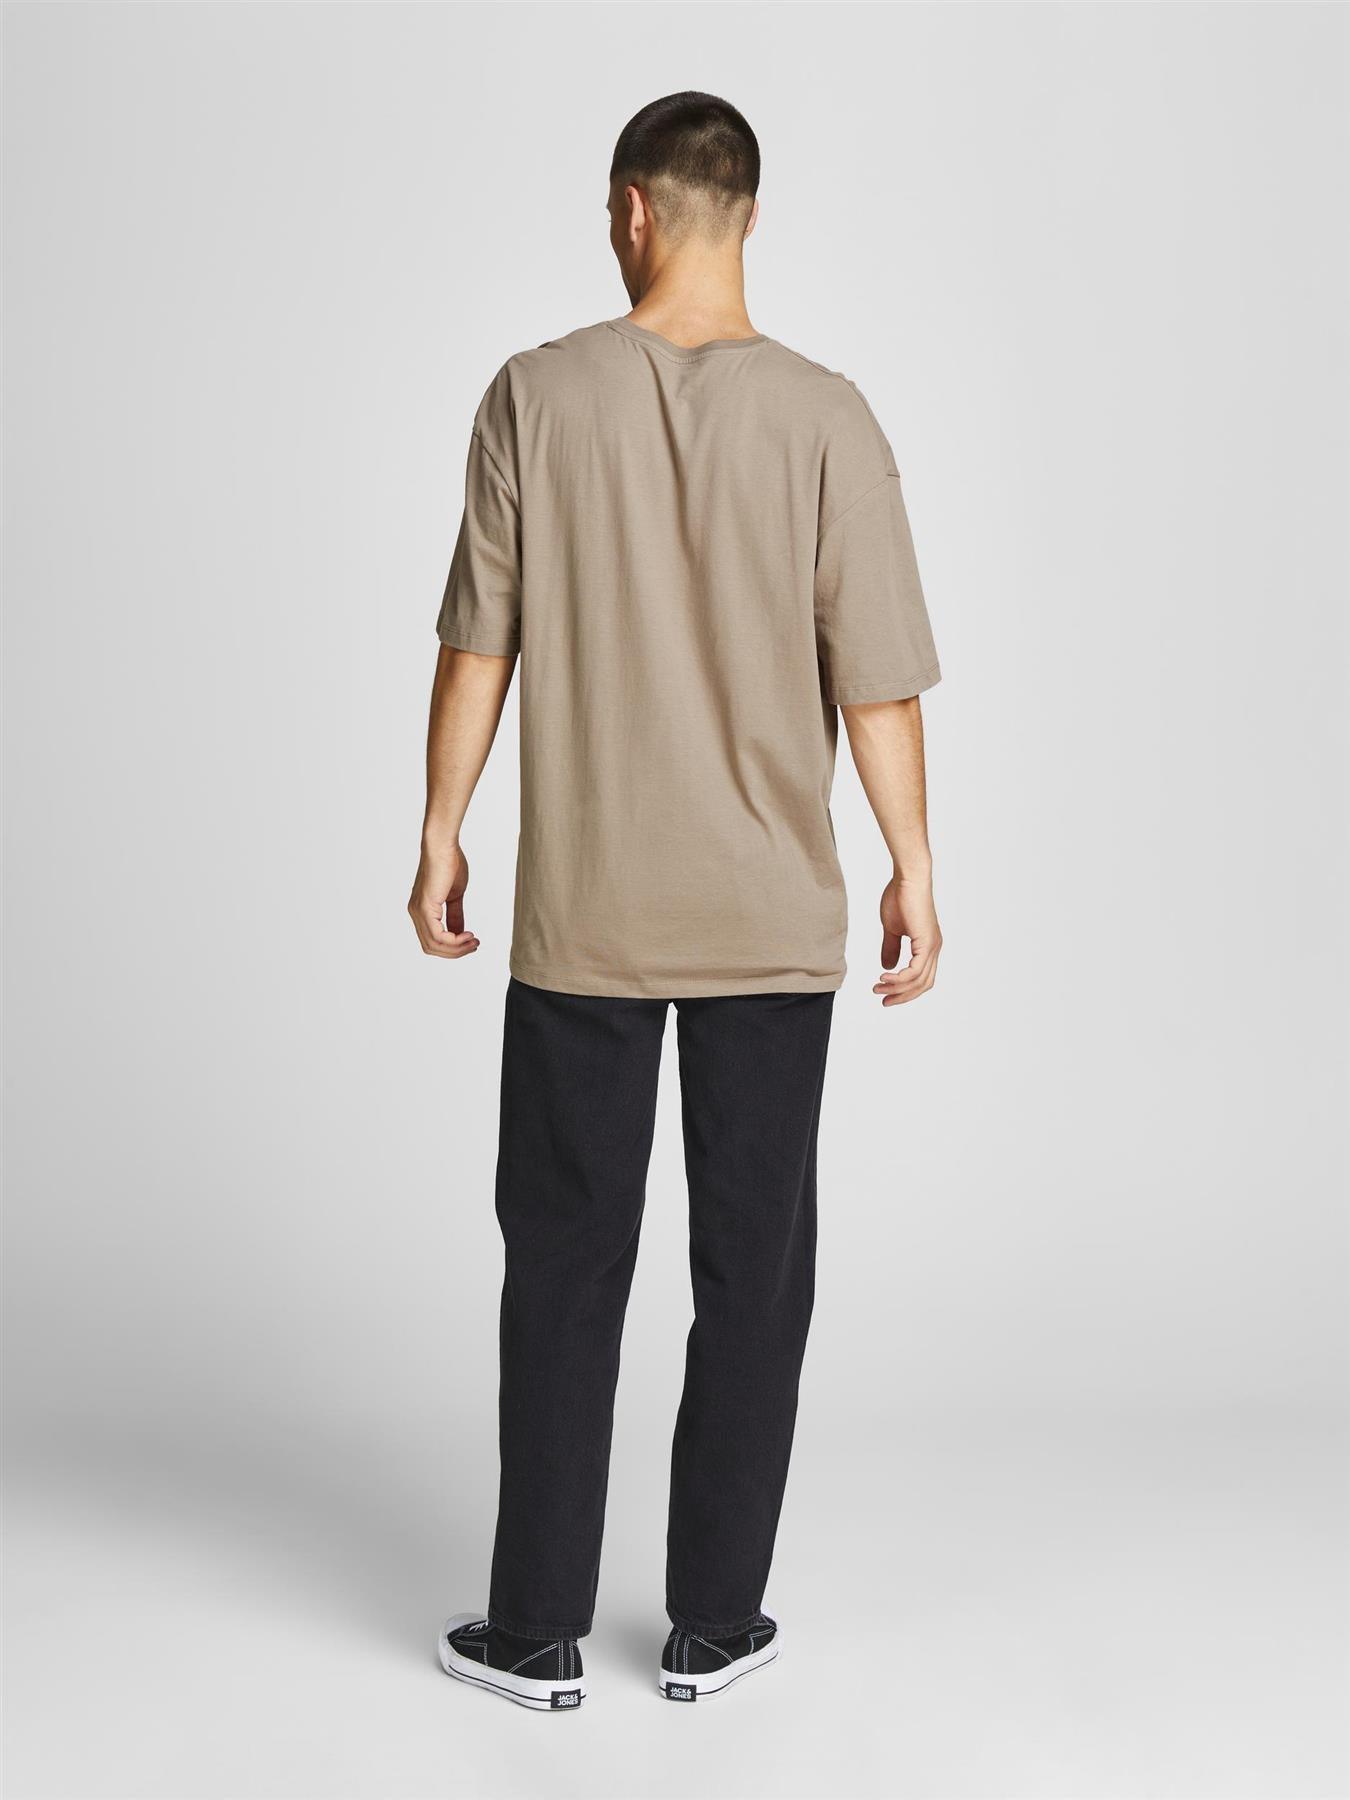 Jack & Jones Mens 'Brink' T-Shirt in Stone - VR2 Clothing